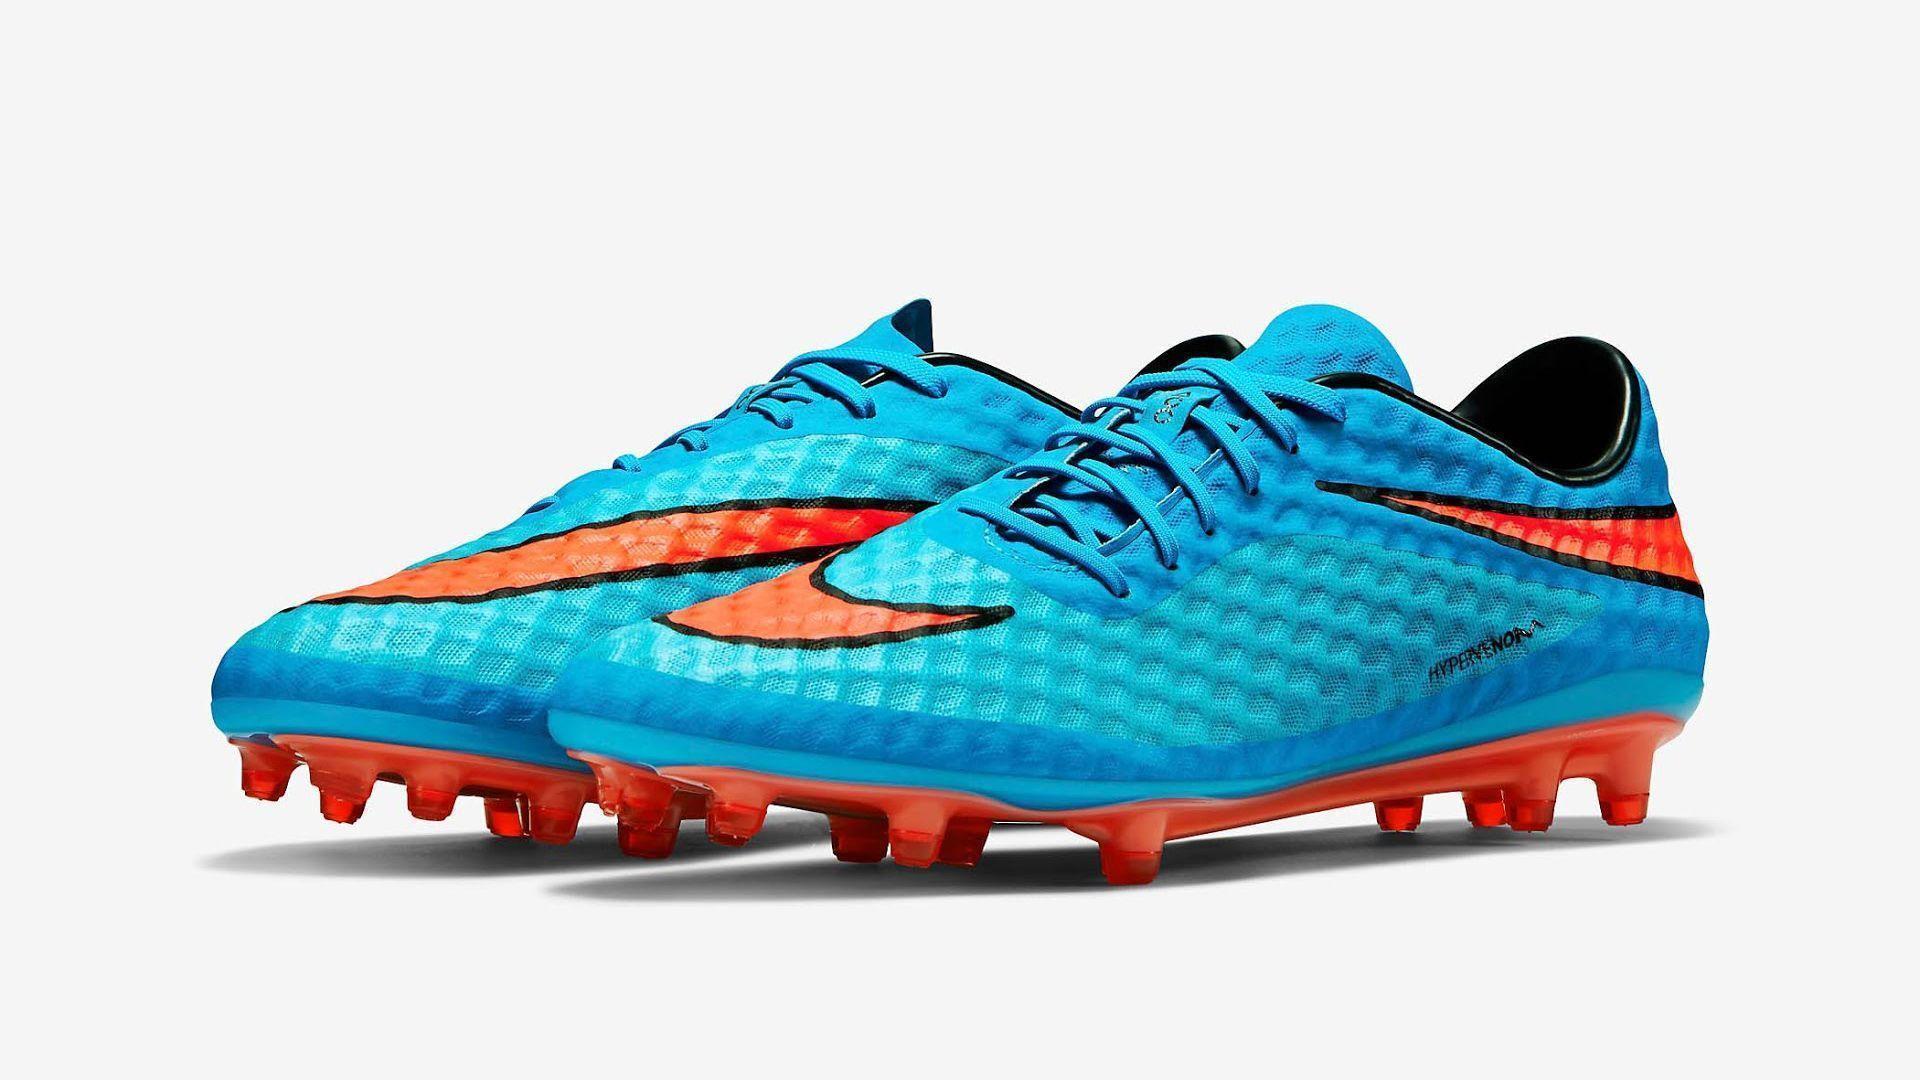 Blue Nike Hypervenom Phantom 2015 Football Boots Wallpaper Wide or